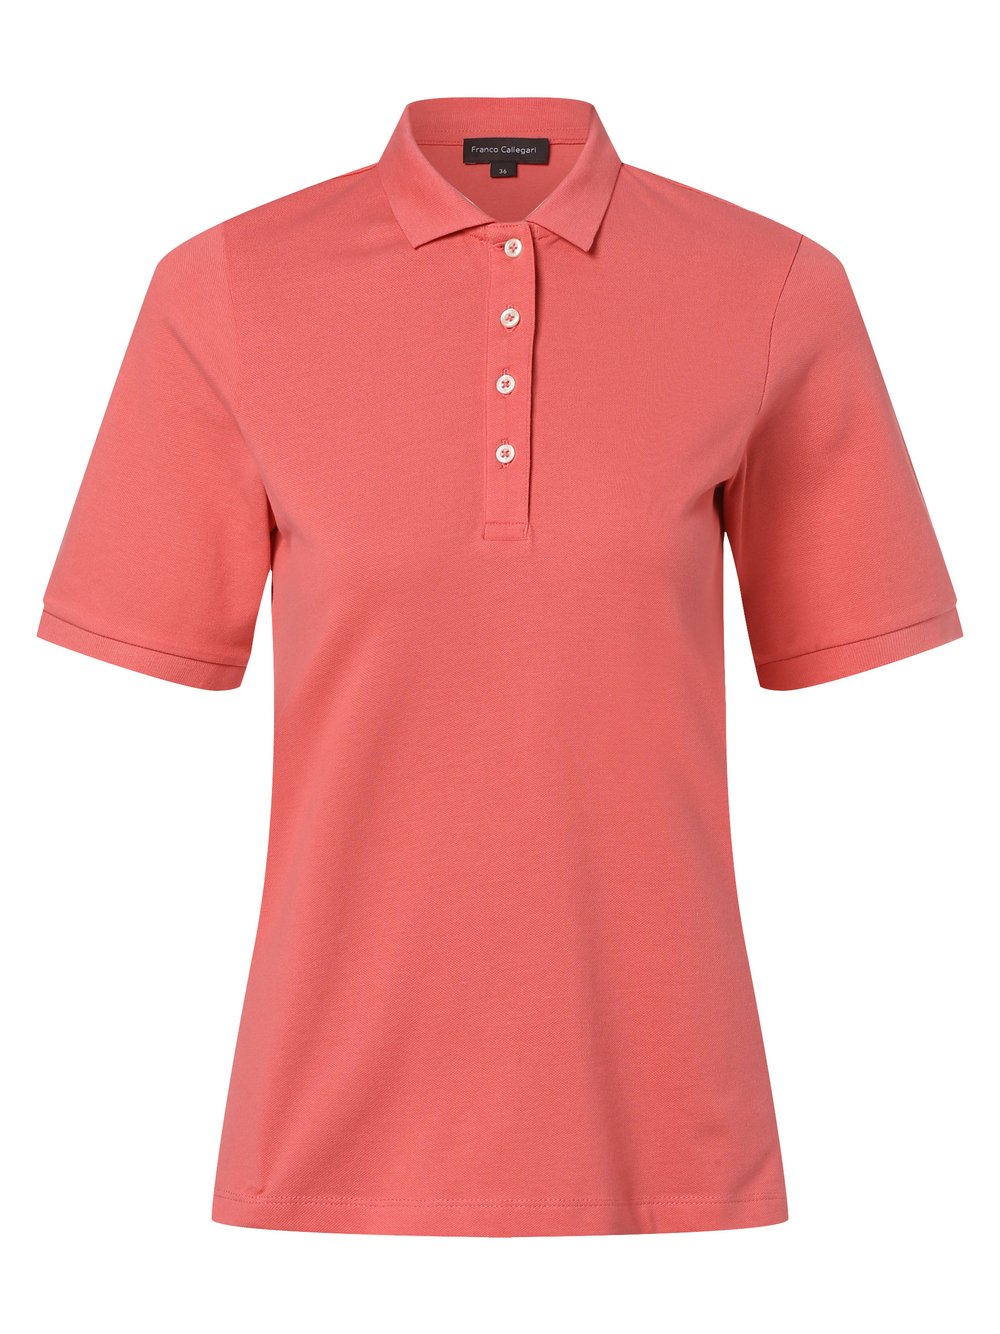 Franco Callegari - Damska koszulka polo, pomarańczowy